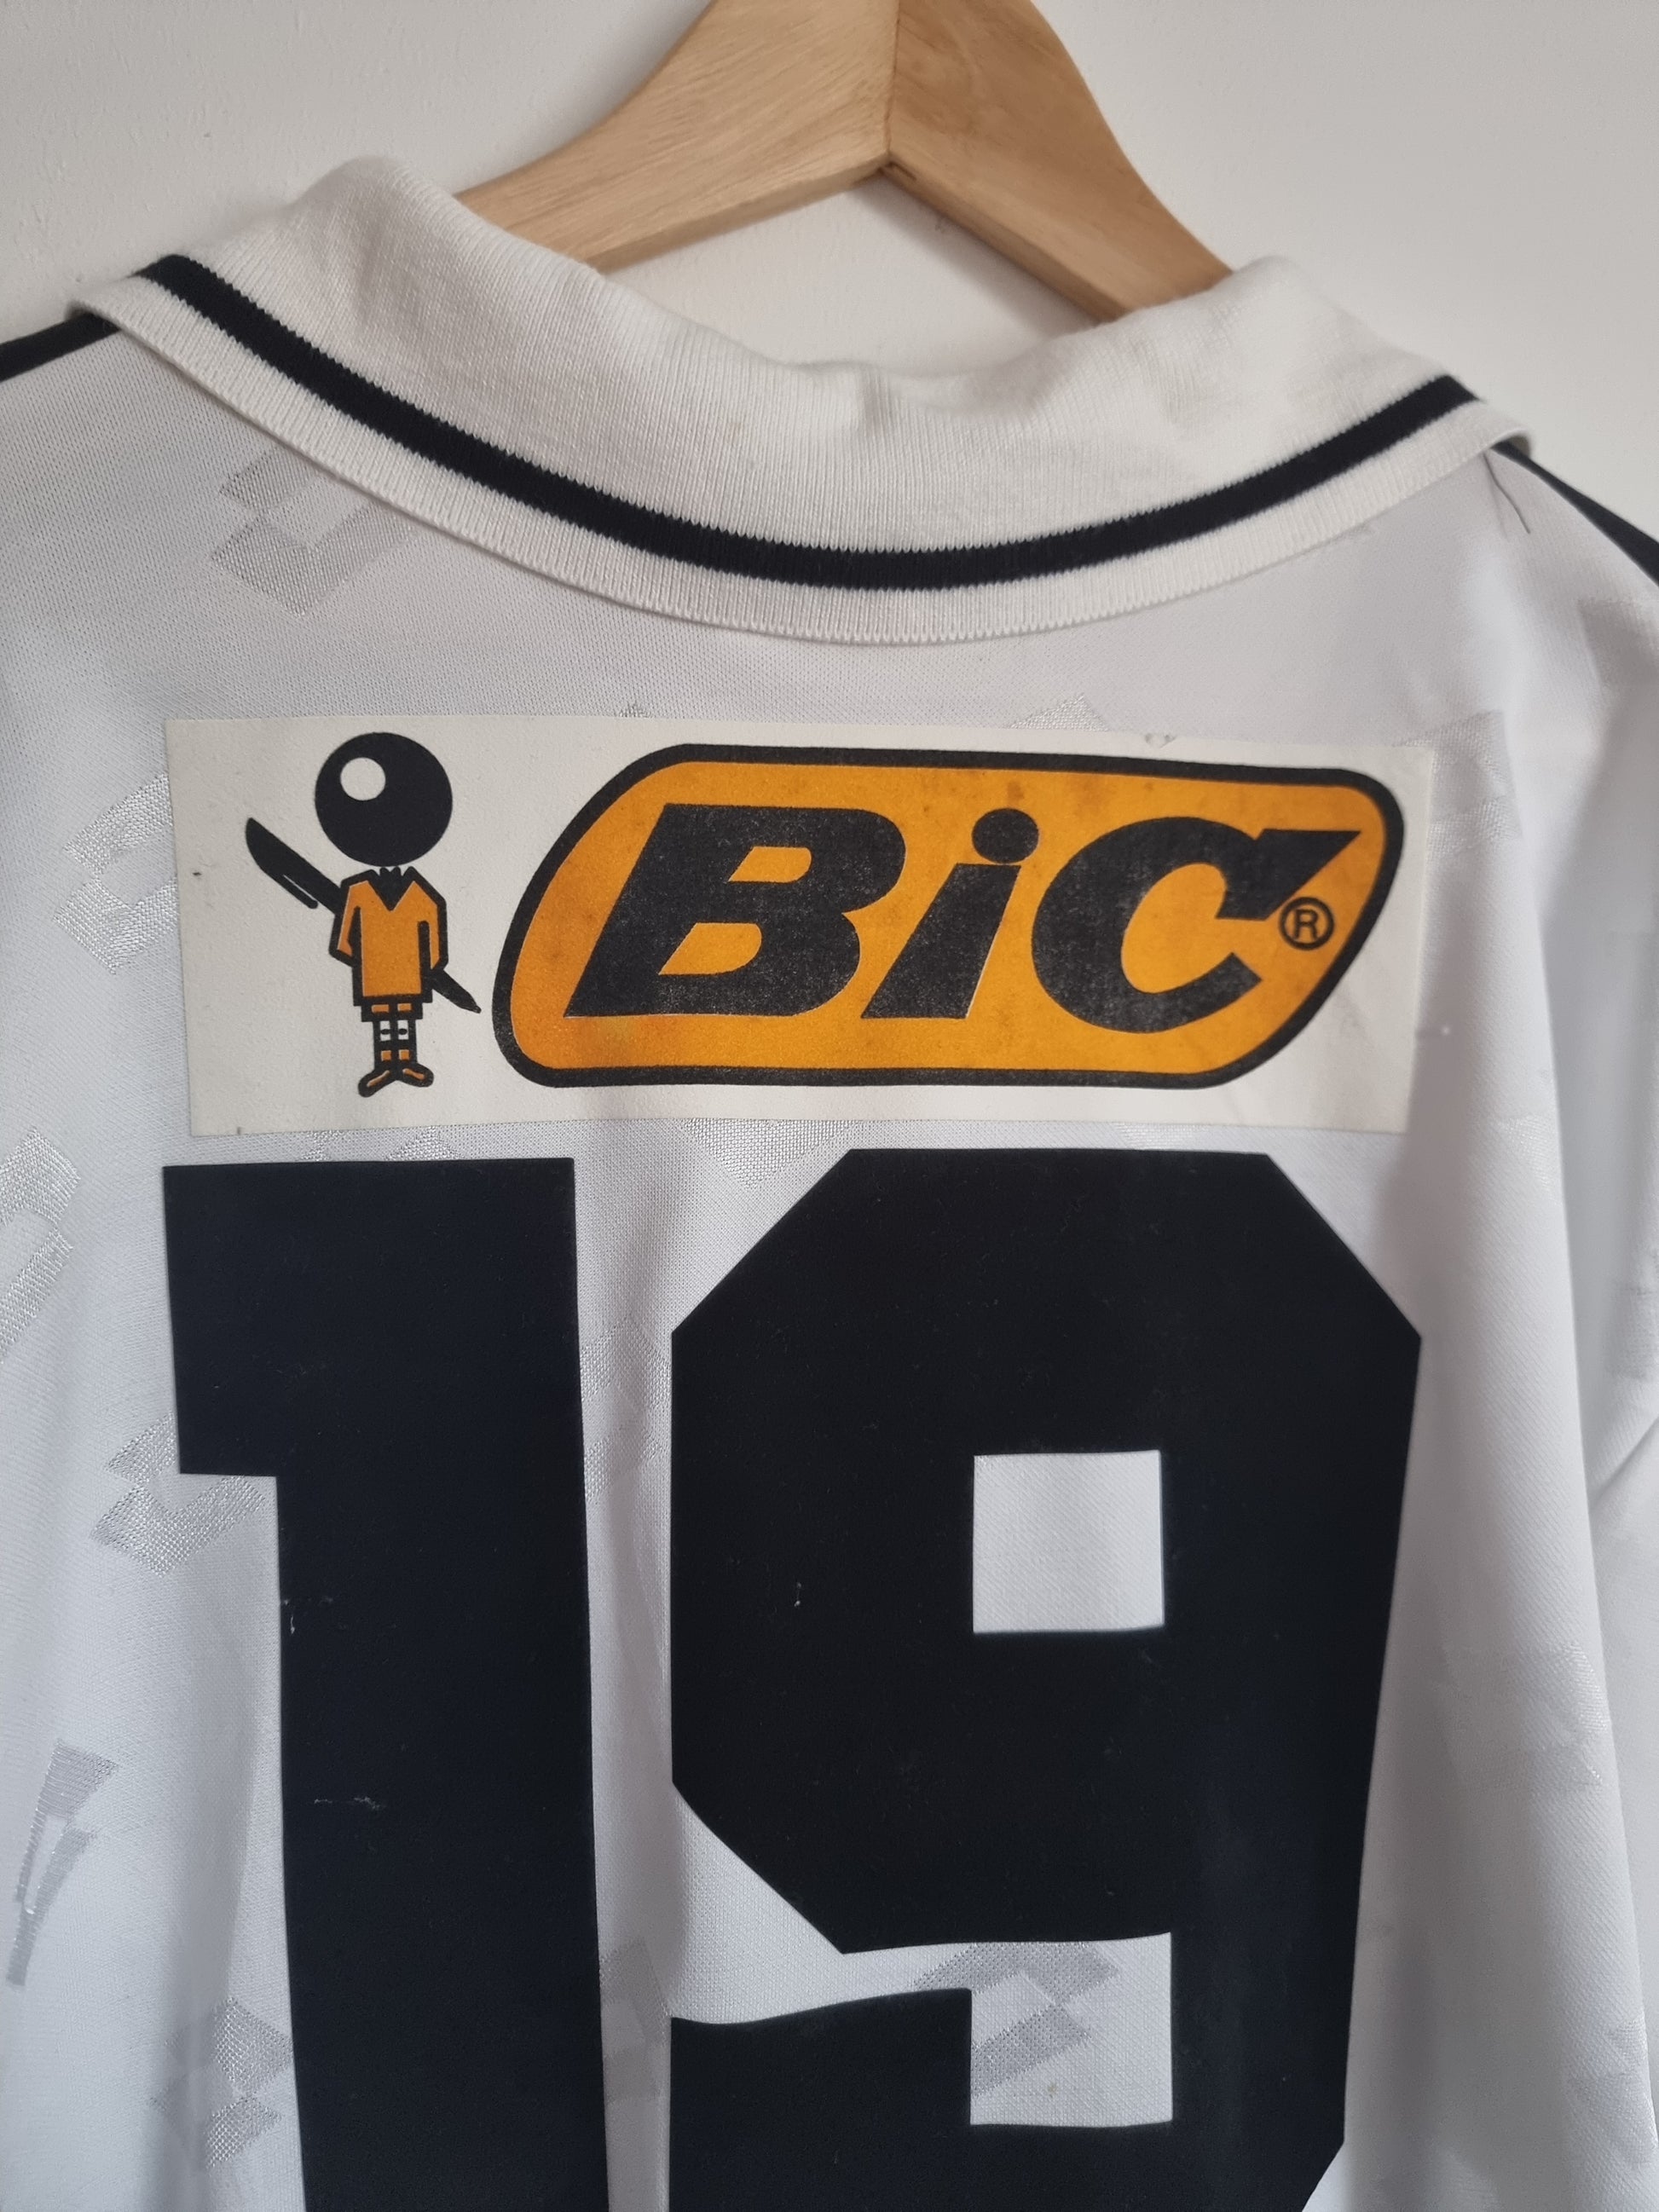 Lugano Cup Shirt football shirt 1993. Sponsored by Bic